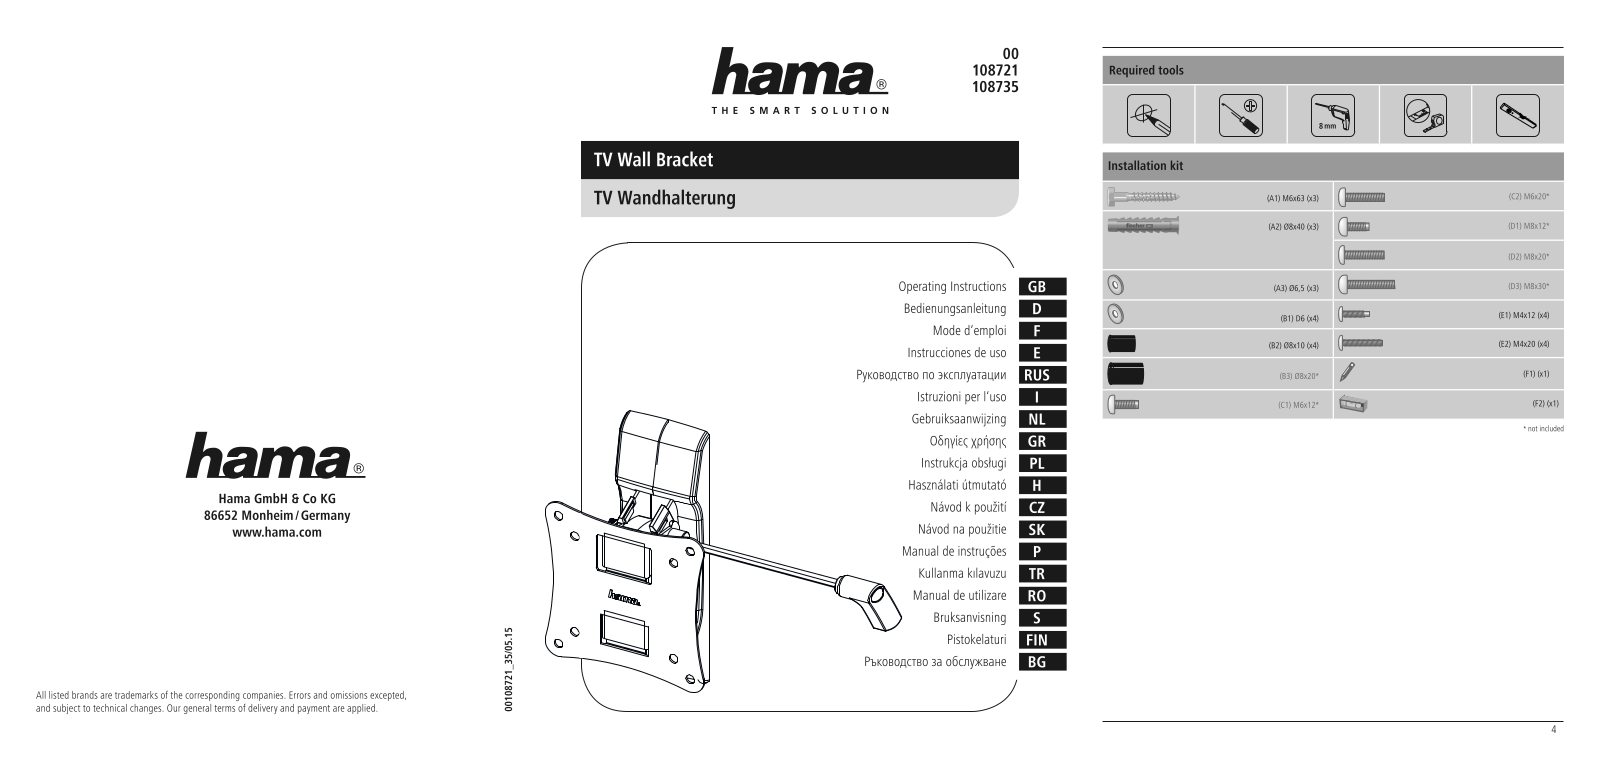 Hama tv wall bracket operation manual